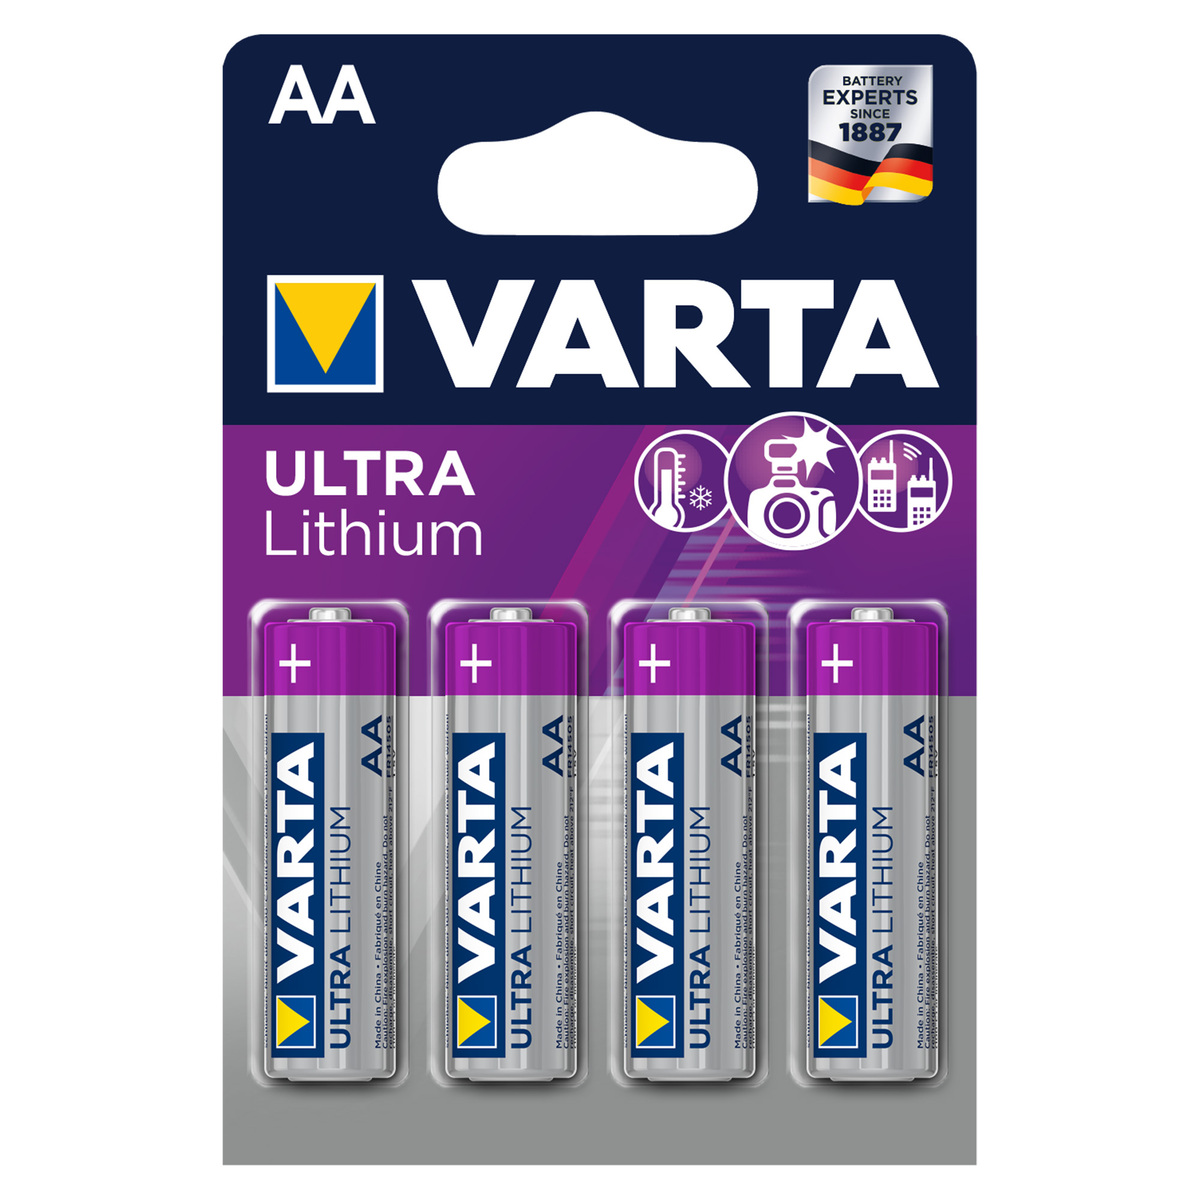 Varta Lithium AA Battery 4pcs